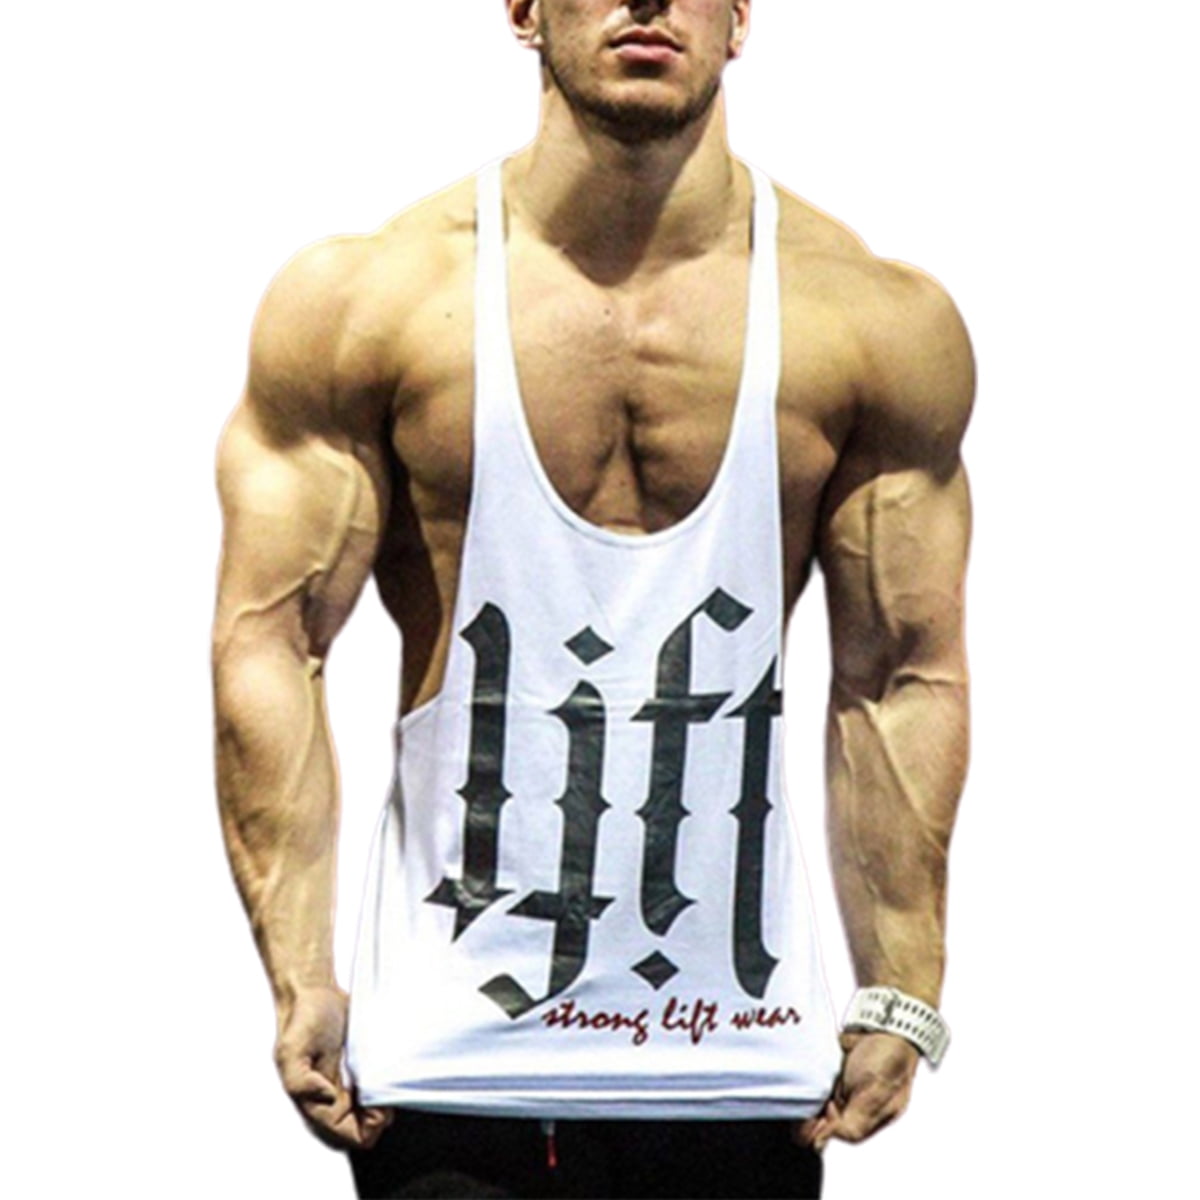 White, X-Large TAKIYA Mens Gym Stringer Tank Tops Bodybuilding Workout Fitness Muscle Vest Sleeveless Shirts